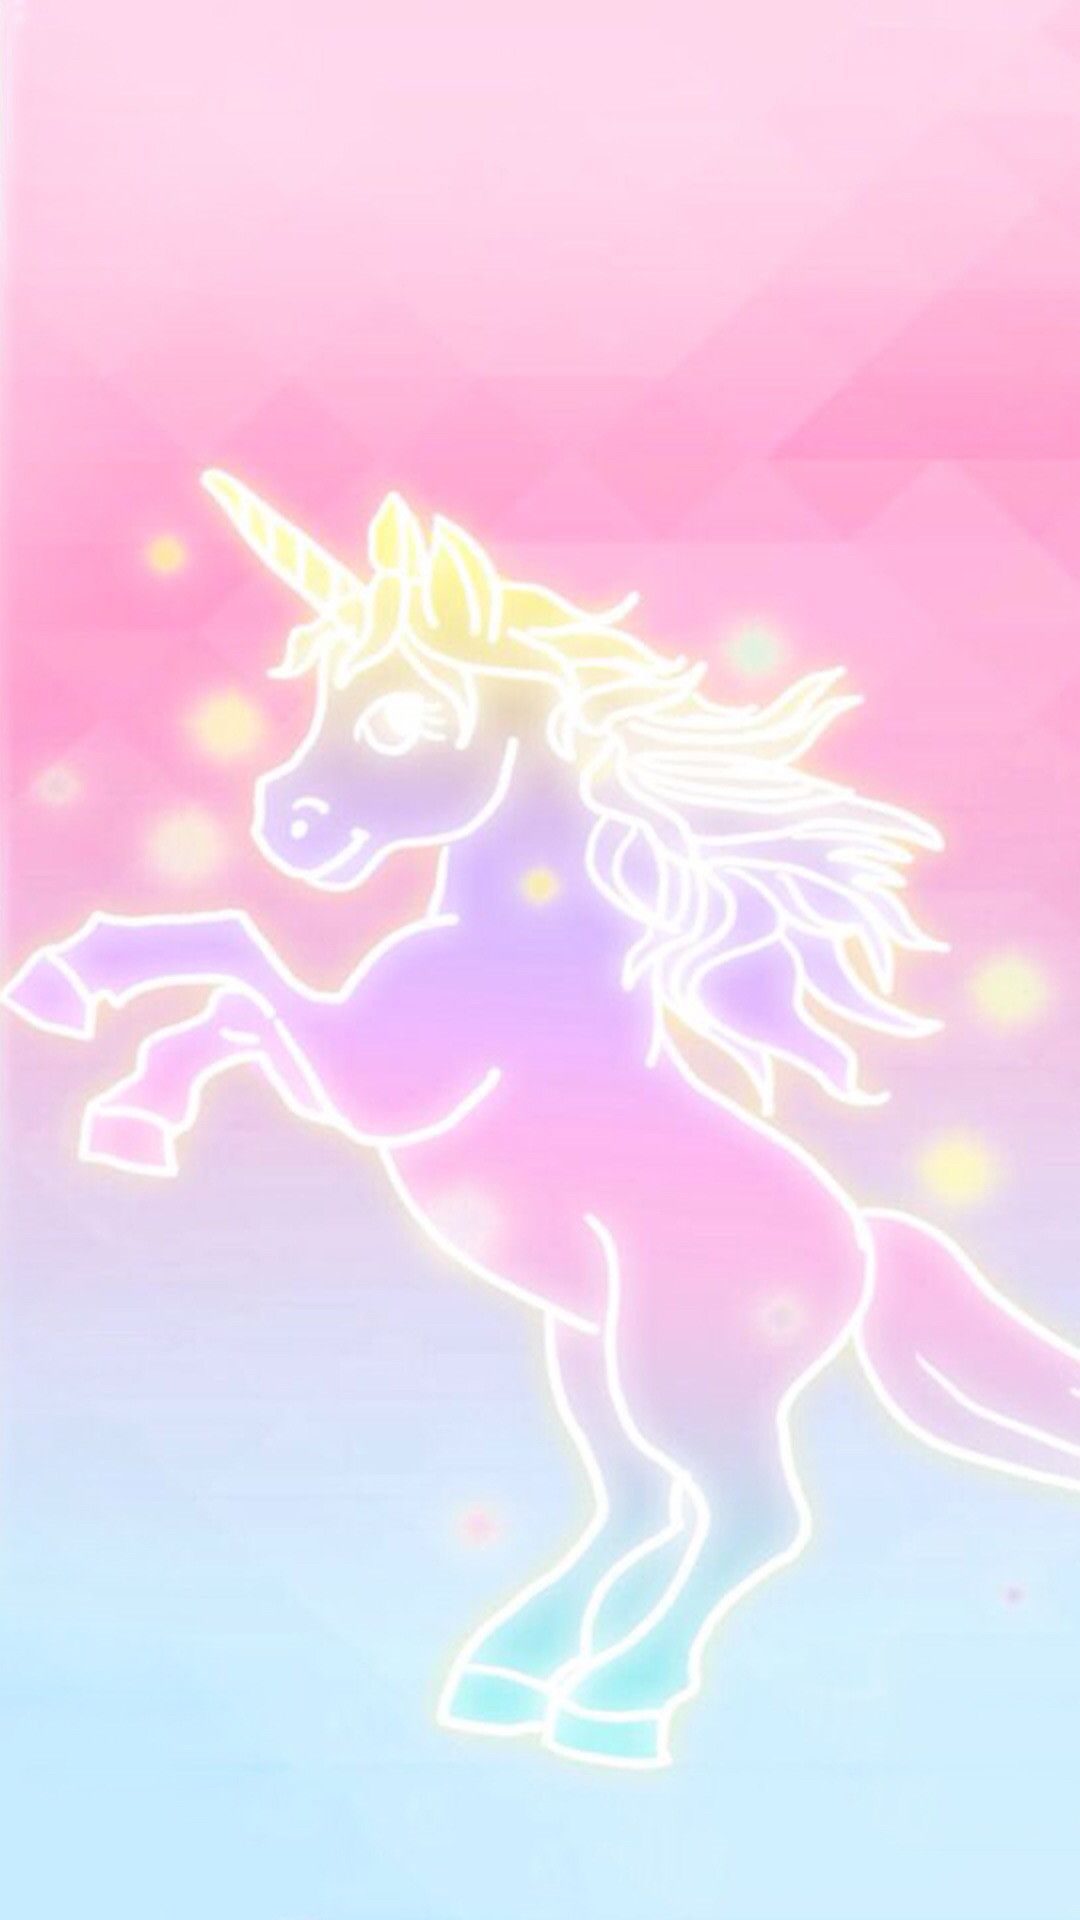 Emoji Unicorn Wallpaper Resume 71 4k .wallpapertip.com